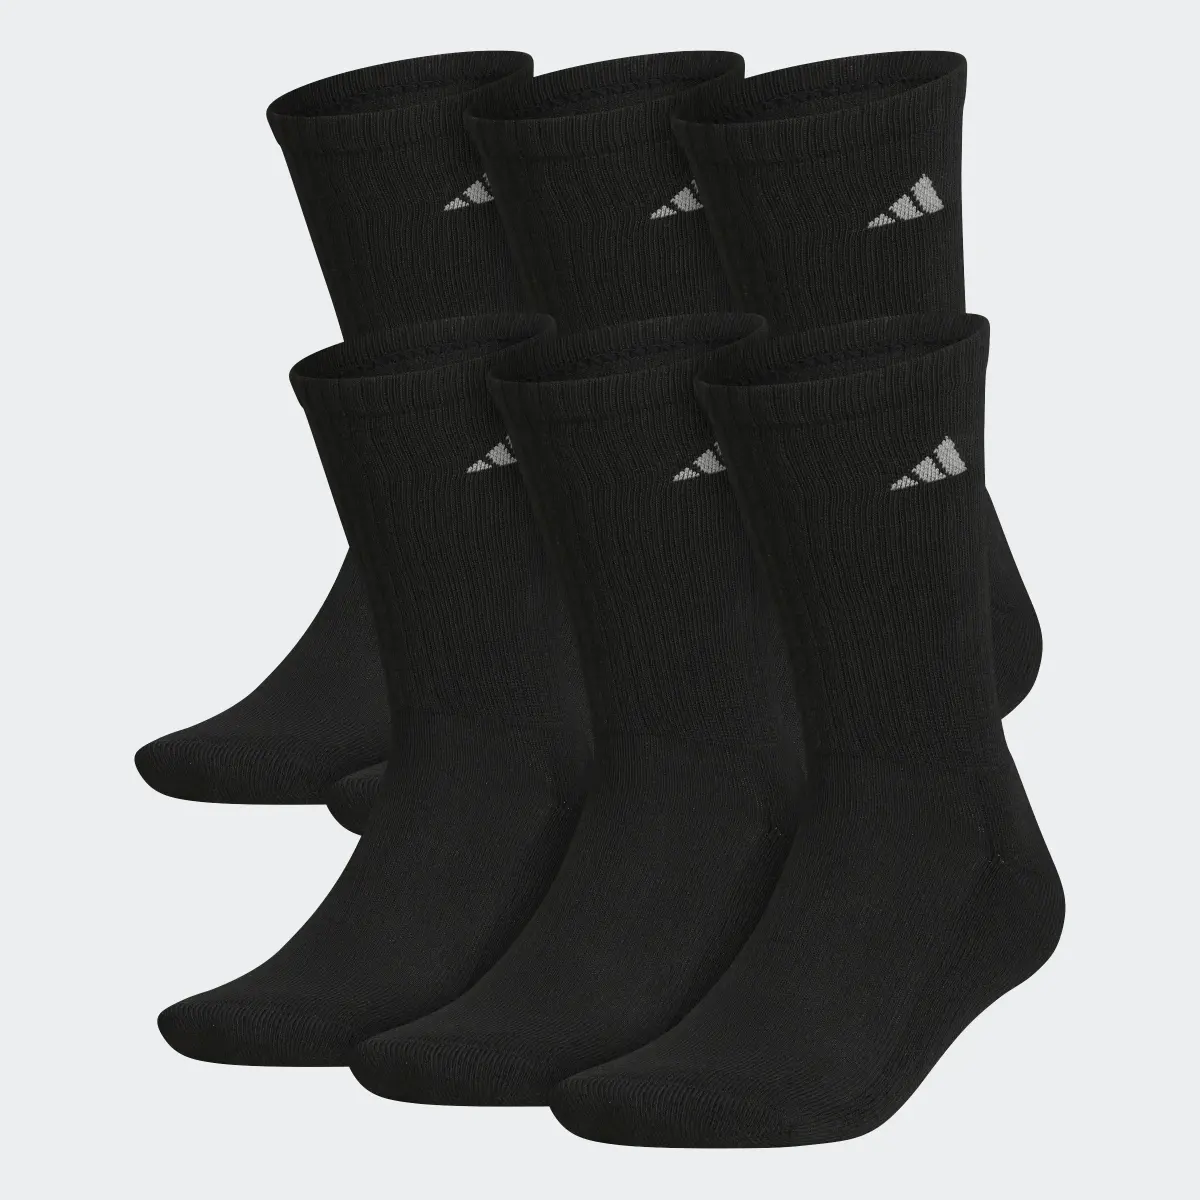 Adidas Athletic Cushioned Crew Socks 6 Pairs. 1